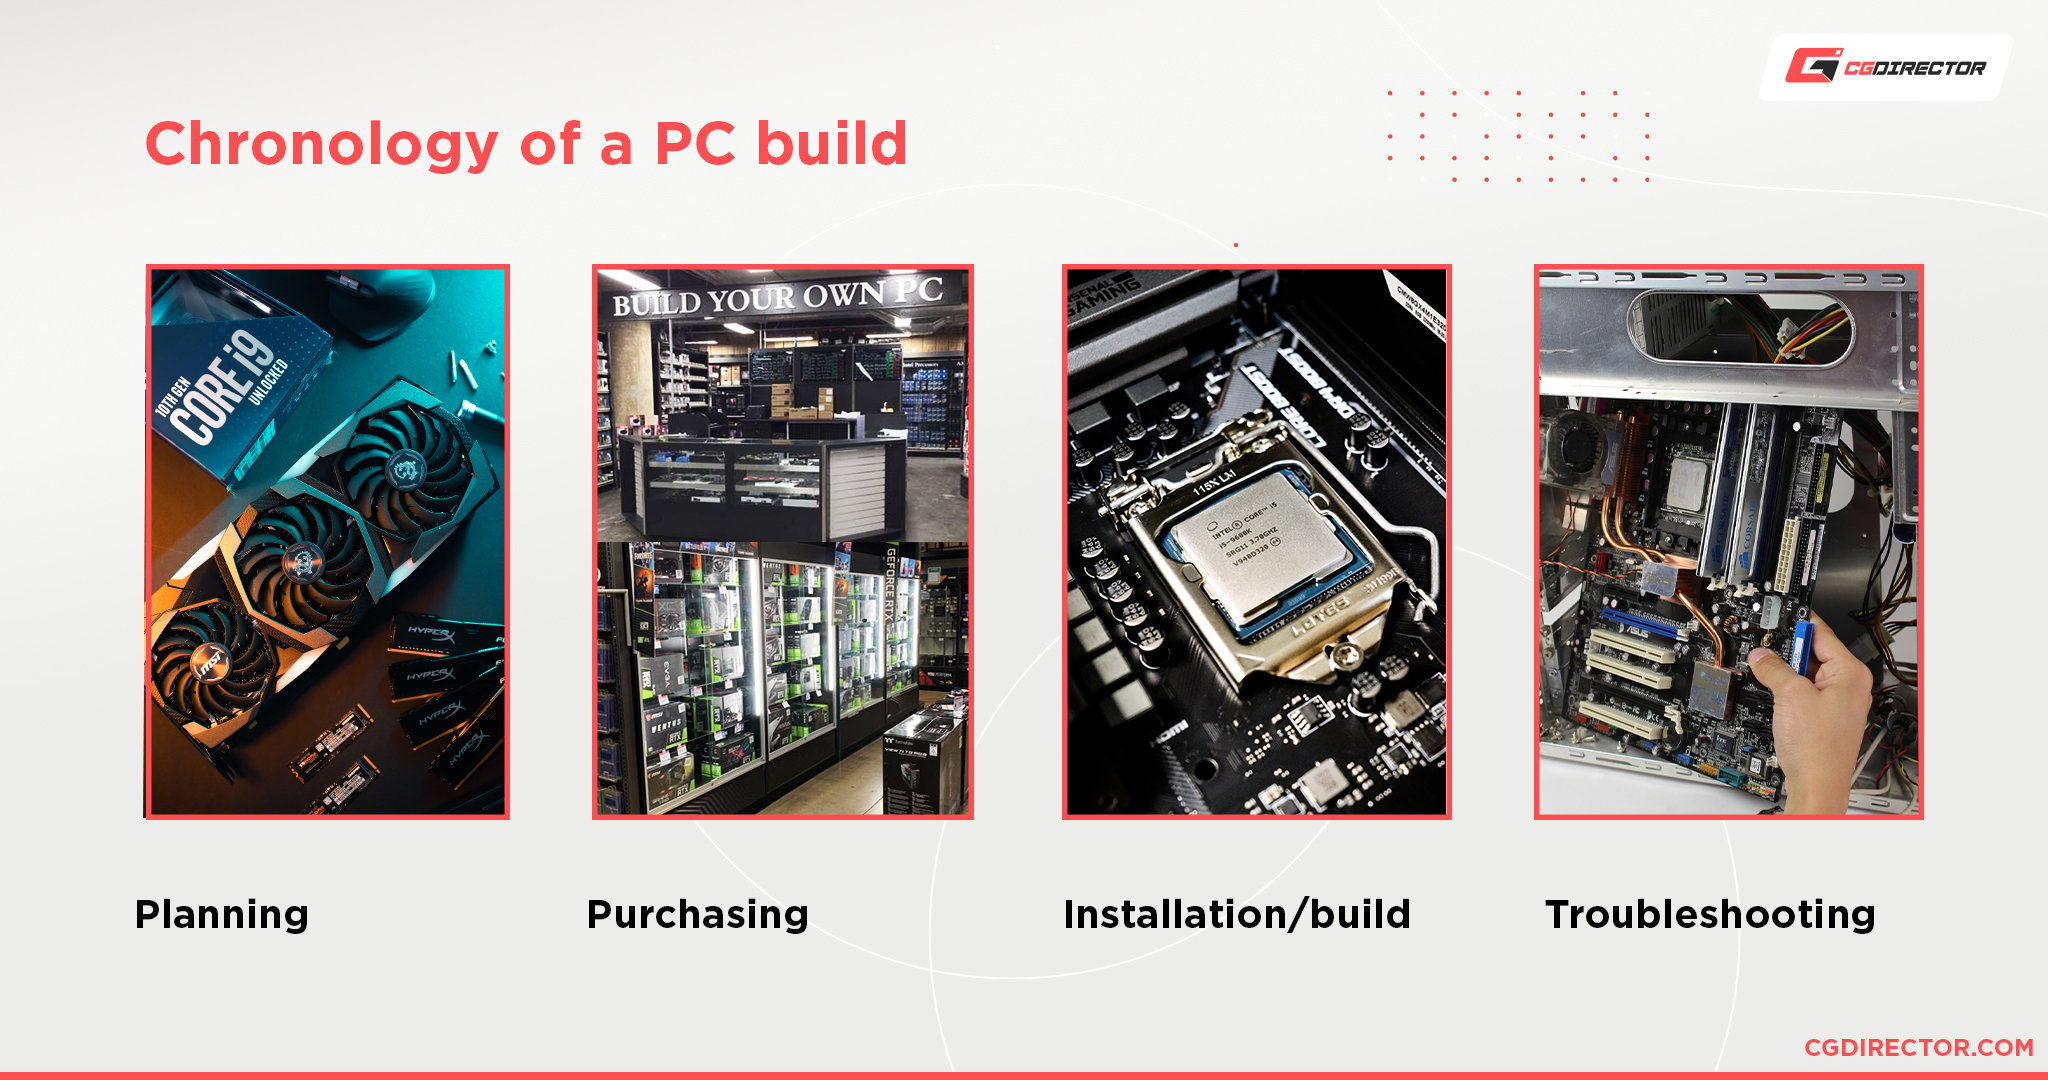 Computer Parts: Shop PC Parts and Build Your Own